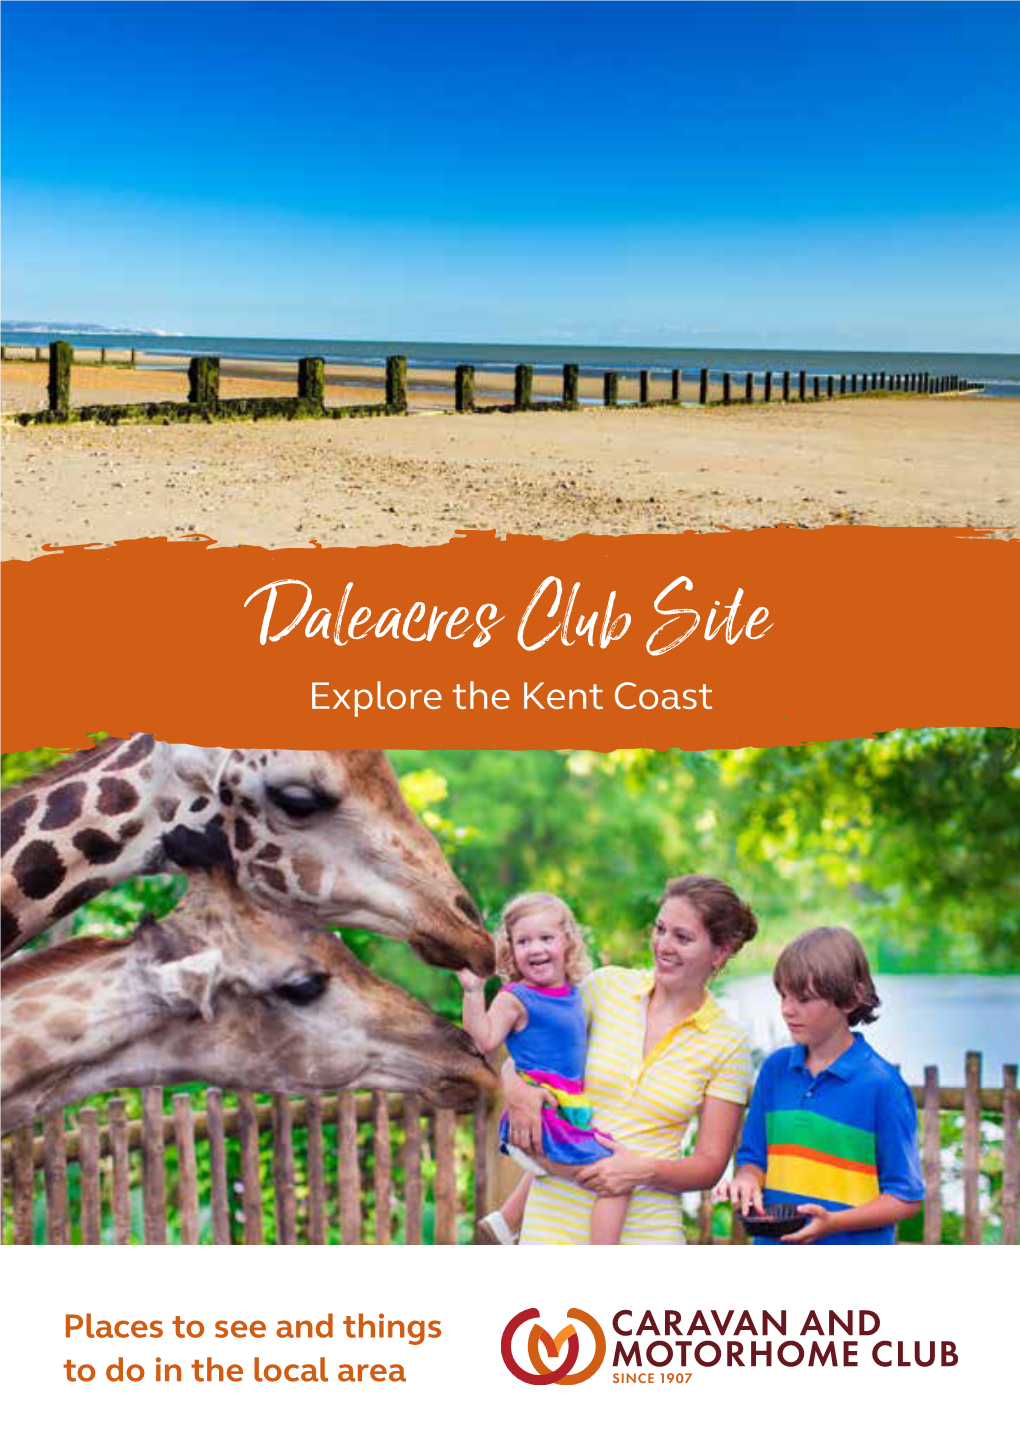 Daleacres Club Site Explore the Kent Coast